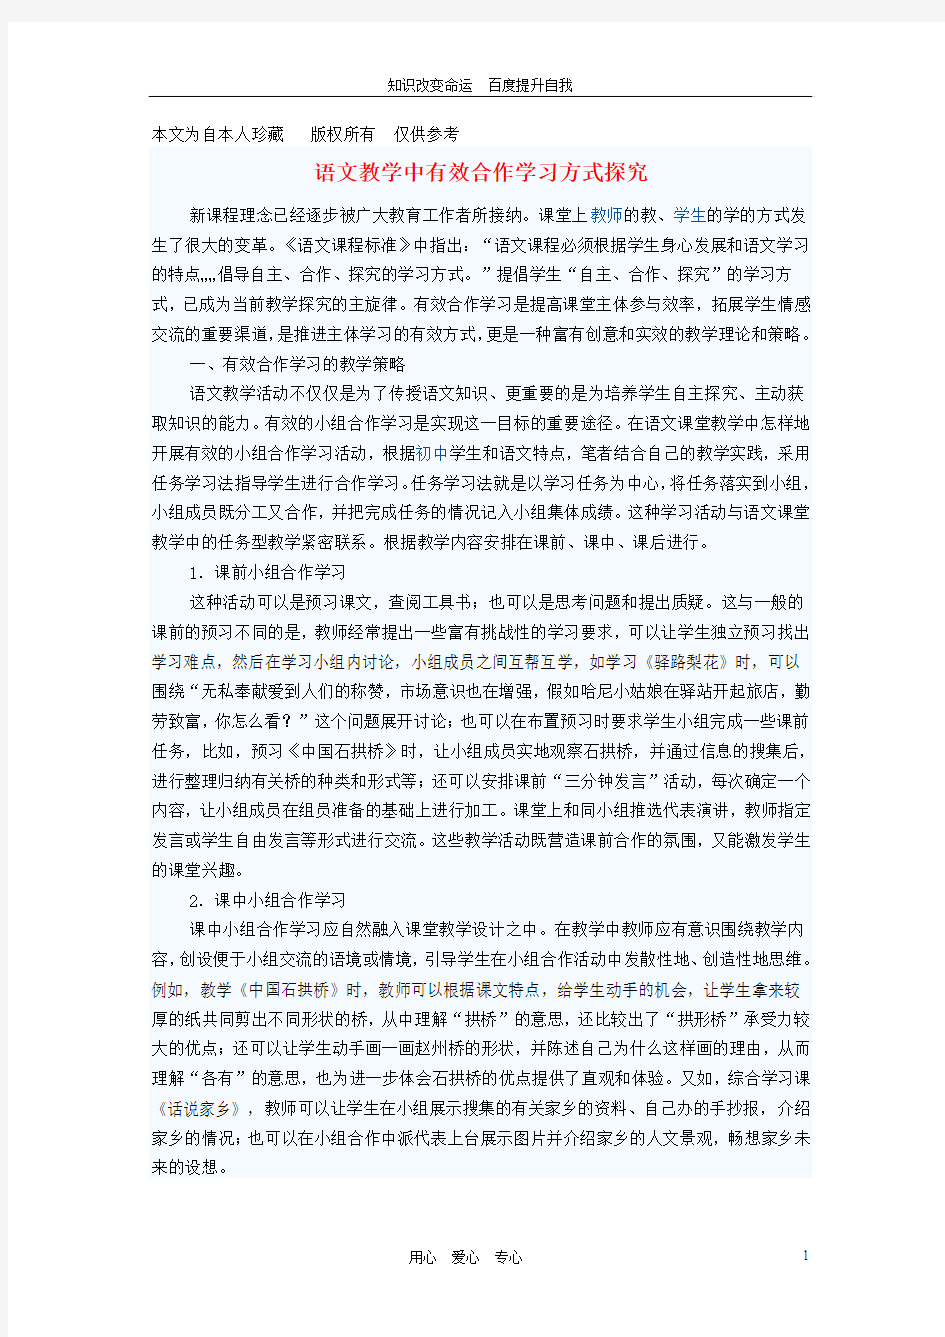 (no.1)初中语文教学论文 语文教学中有效合作学习方式探究